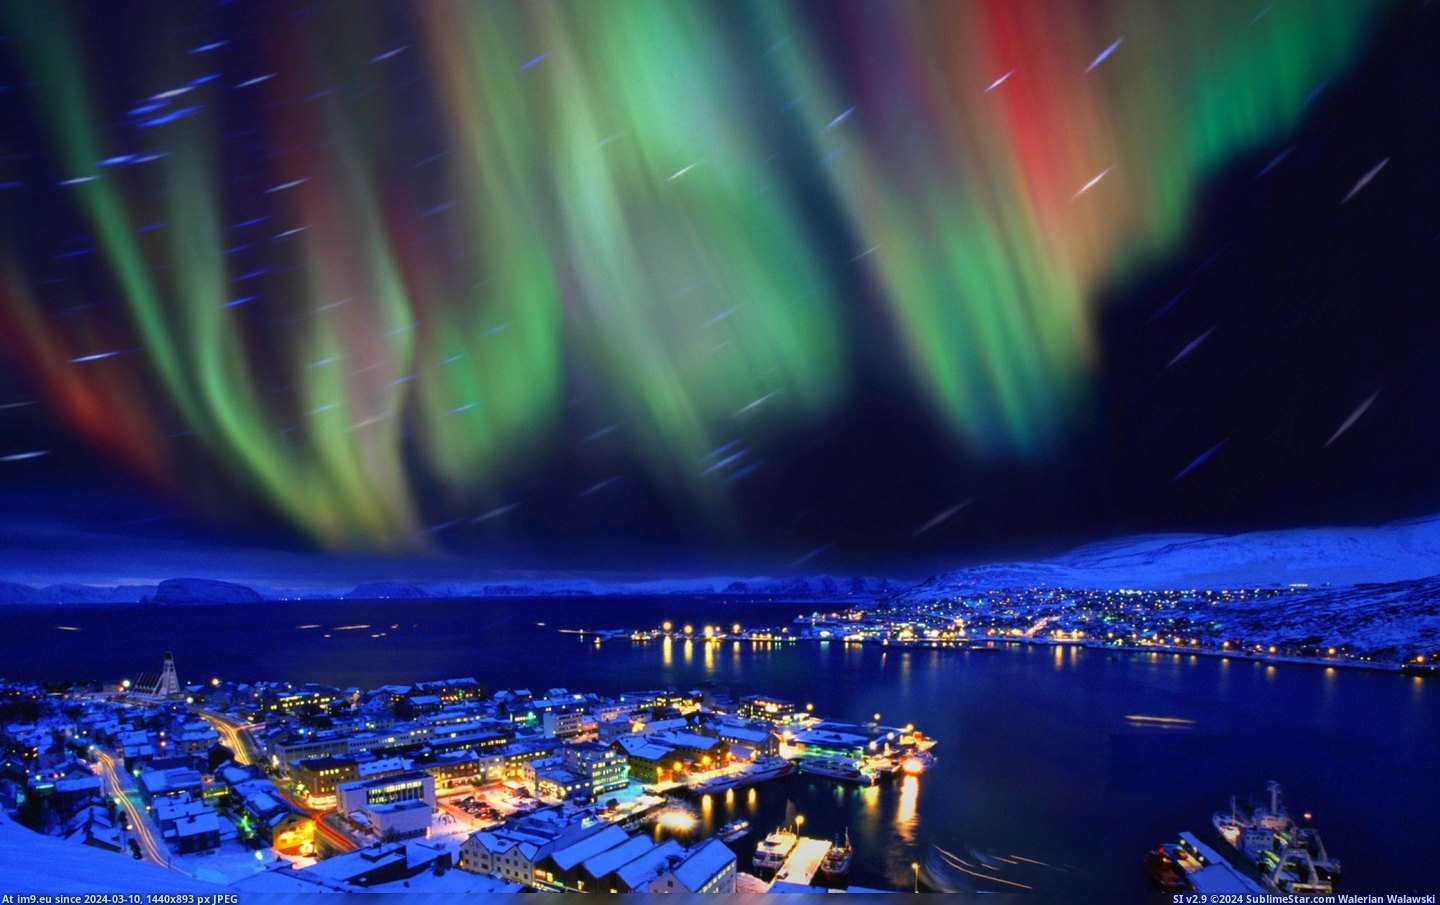 #Lights #Northern #Norway [Pics] Northern Lights Norway Pic. (Изображение из альбом My r/PICS favs))